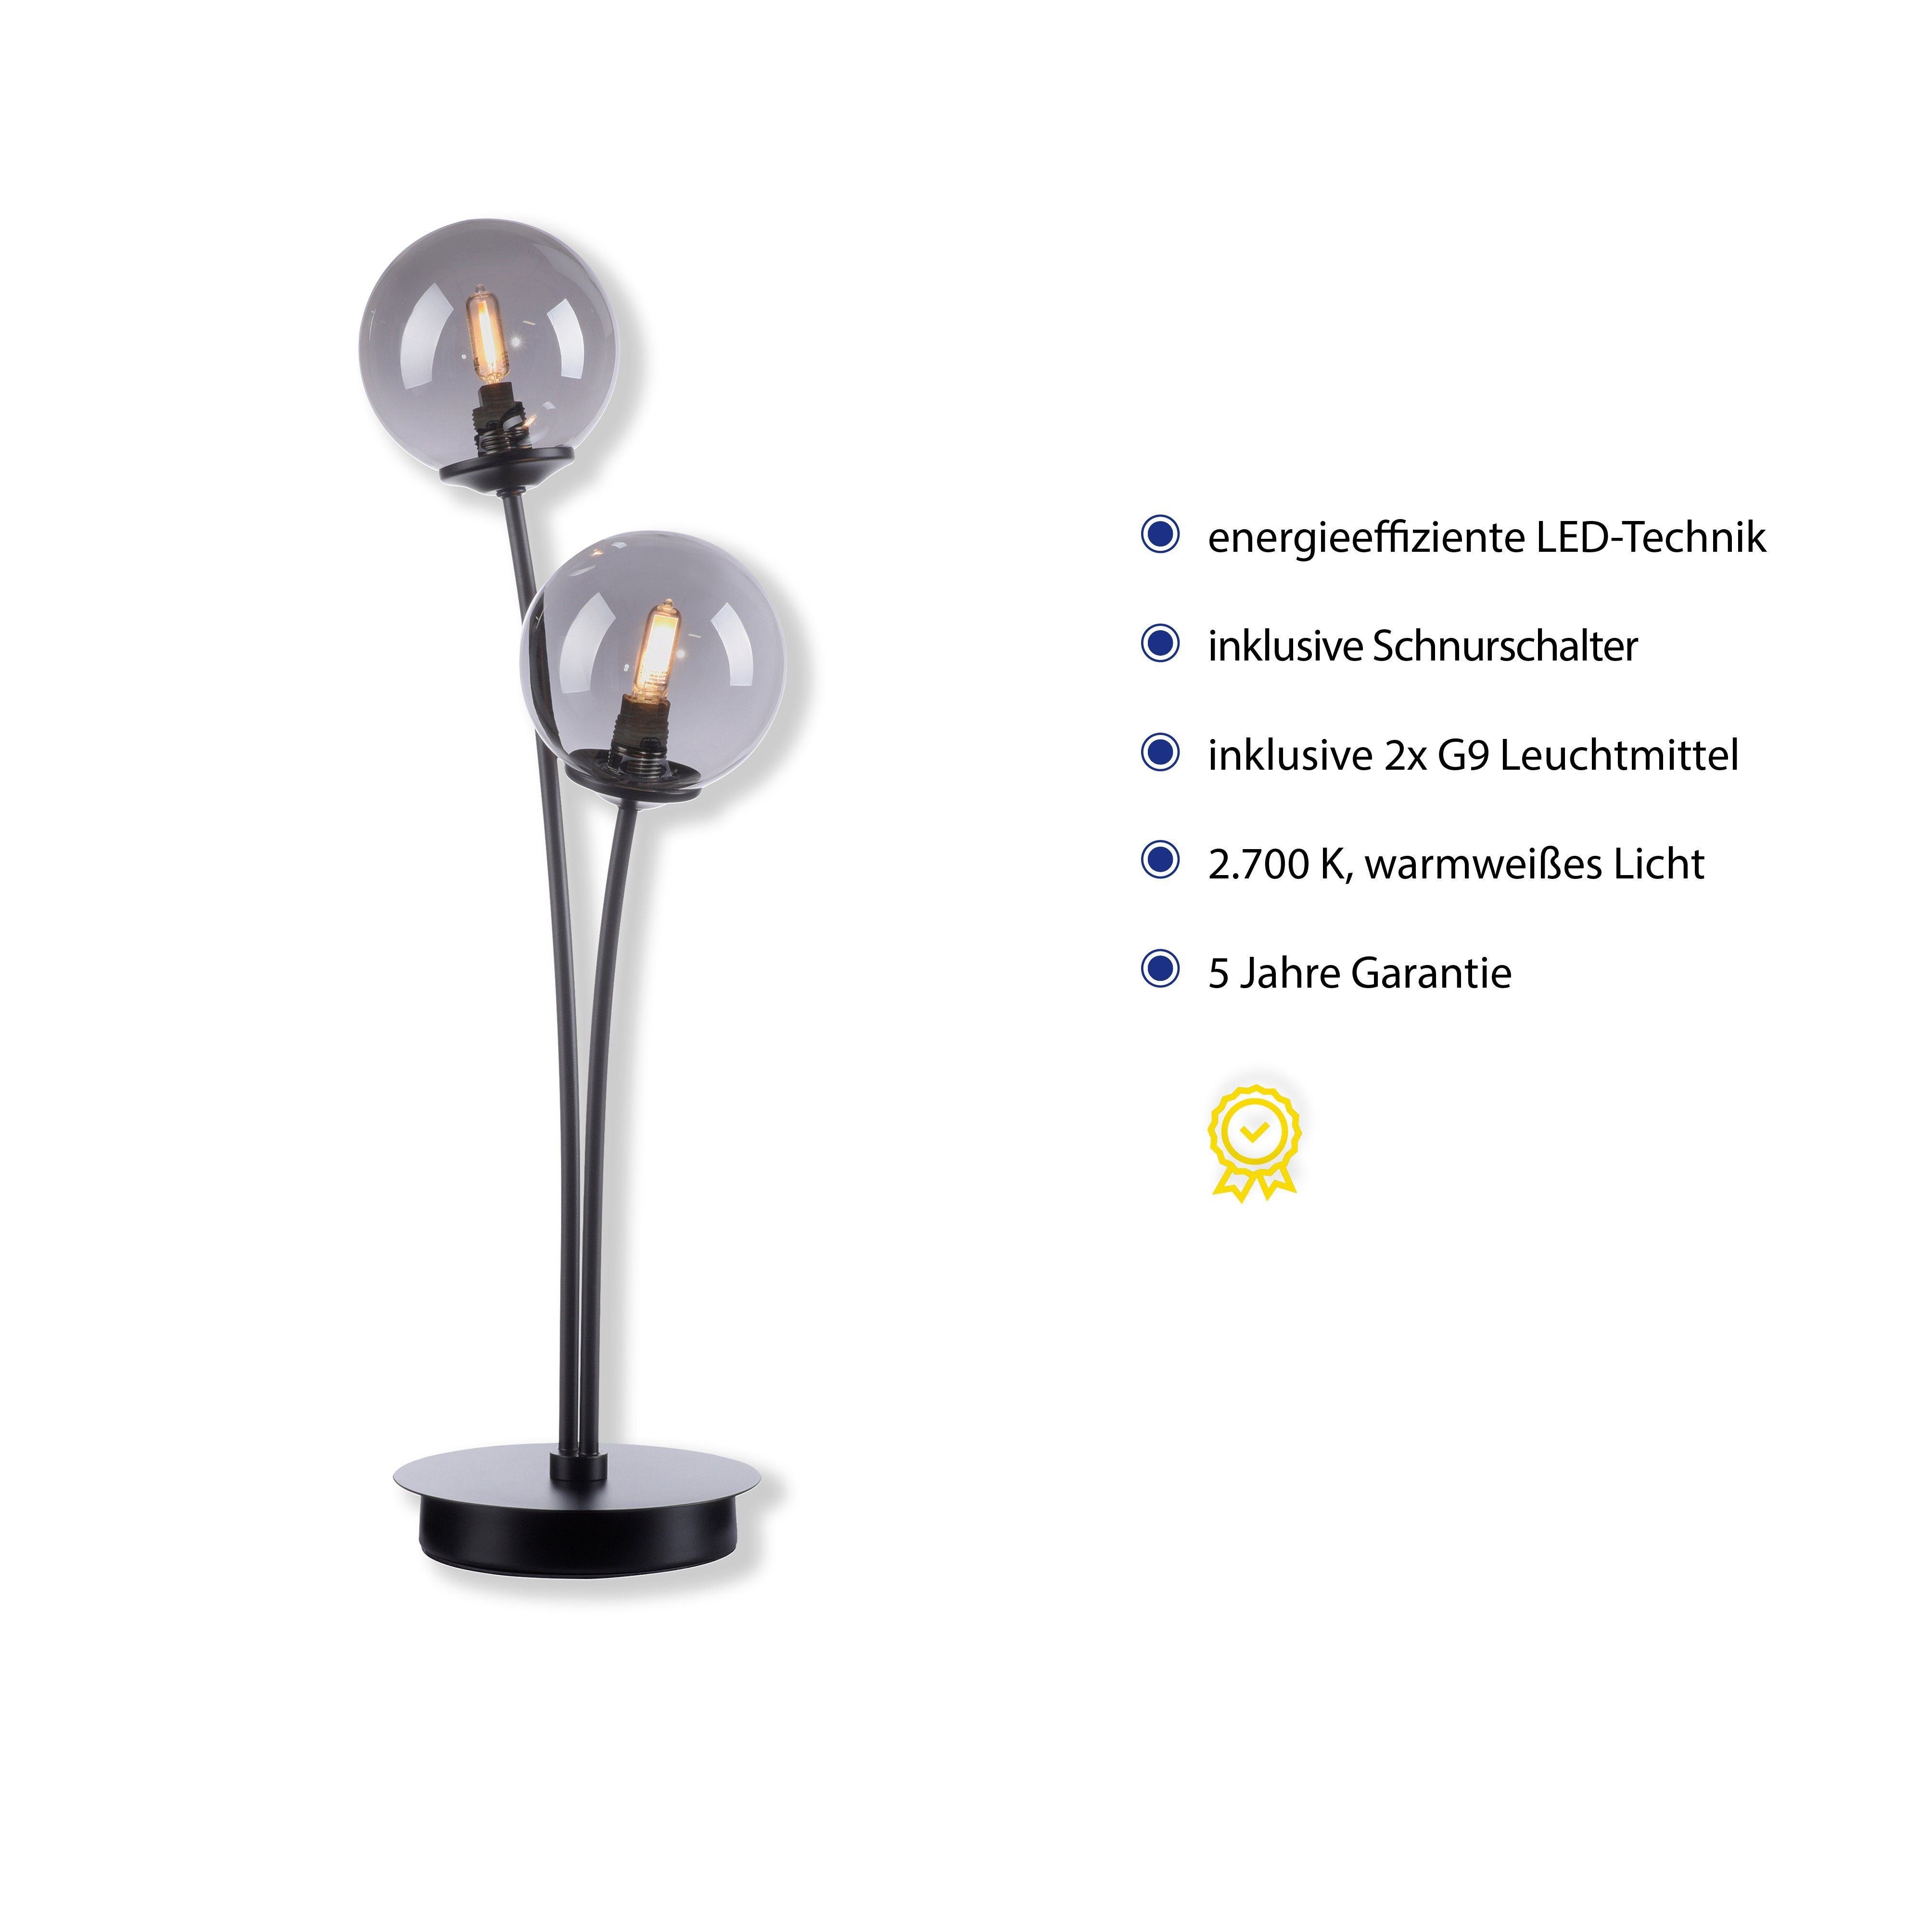 Warmweiß, Paul LED Schnurschalter WIDOW, LED wechselbar, Nachttischlampe Schalter, Neuhaus